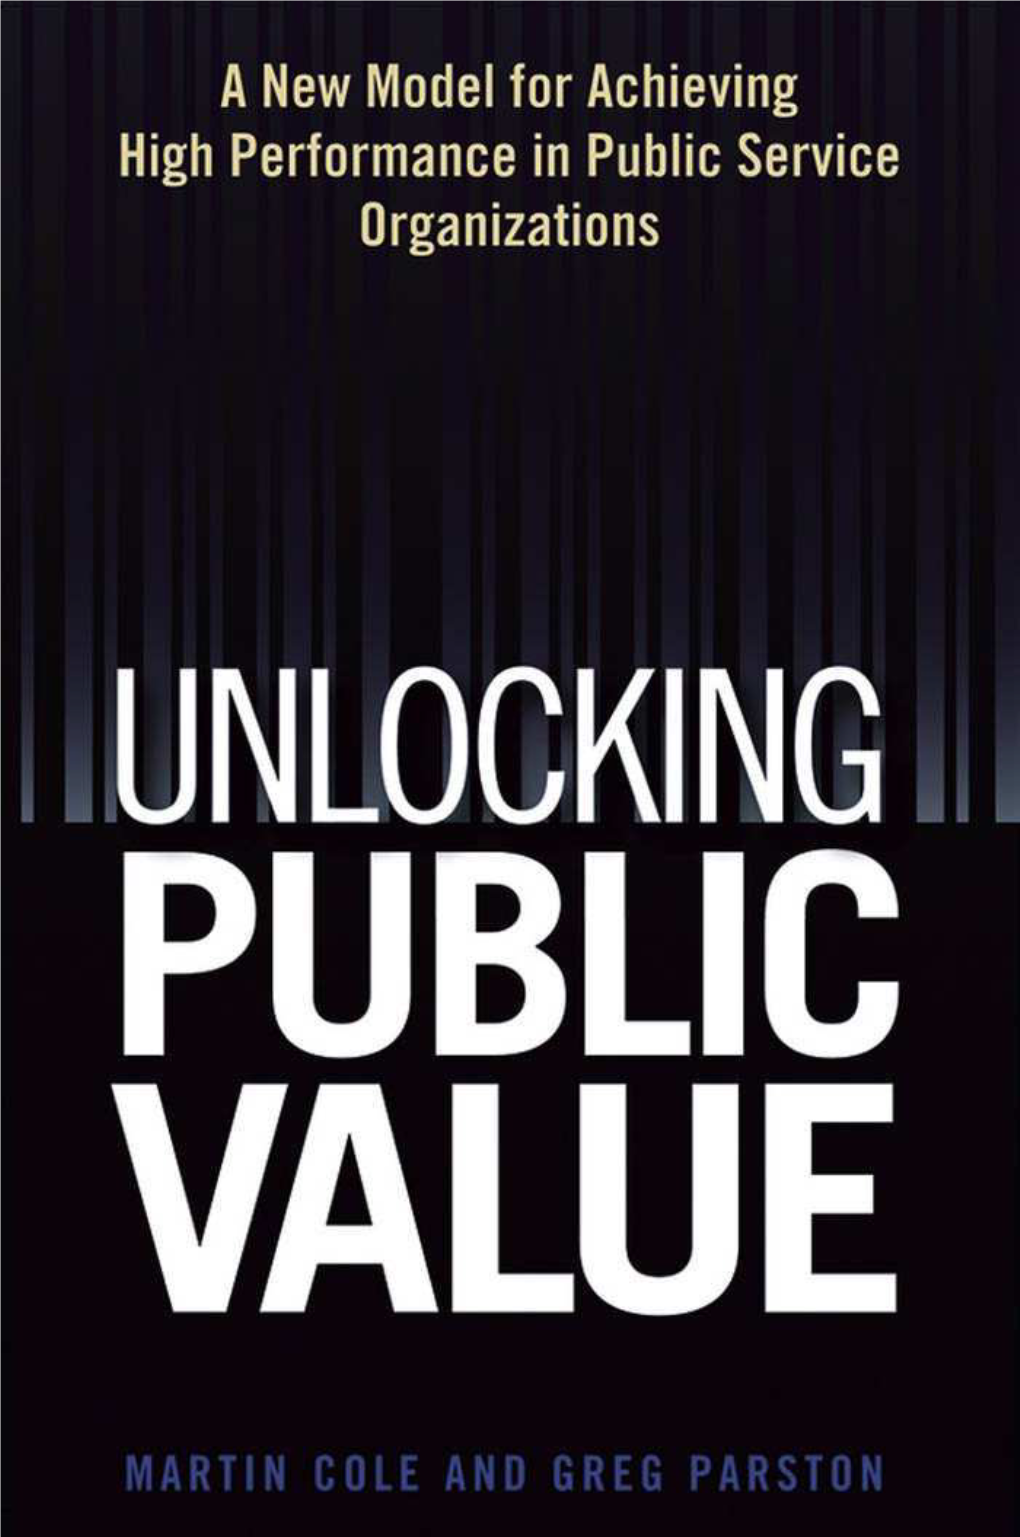 PUBLIC ADMINISTRATION Unlocking Public Value a New Model For